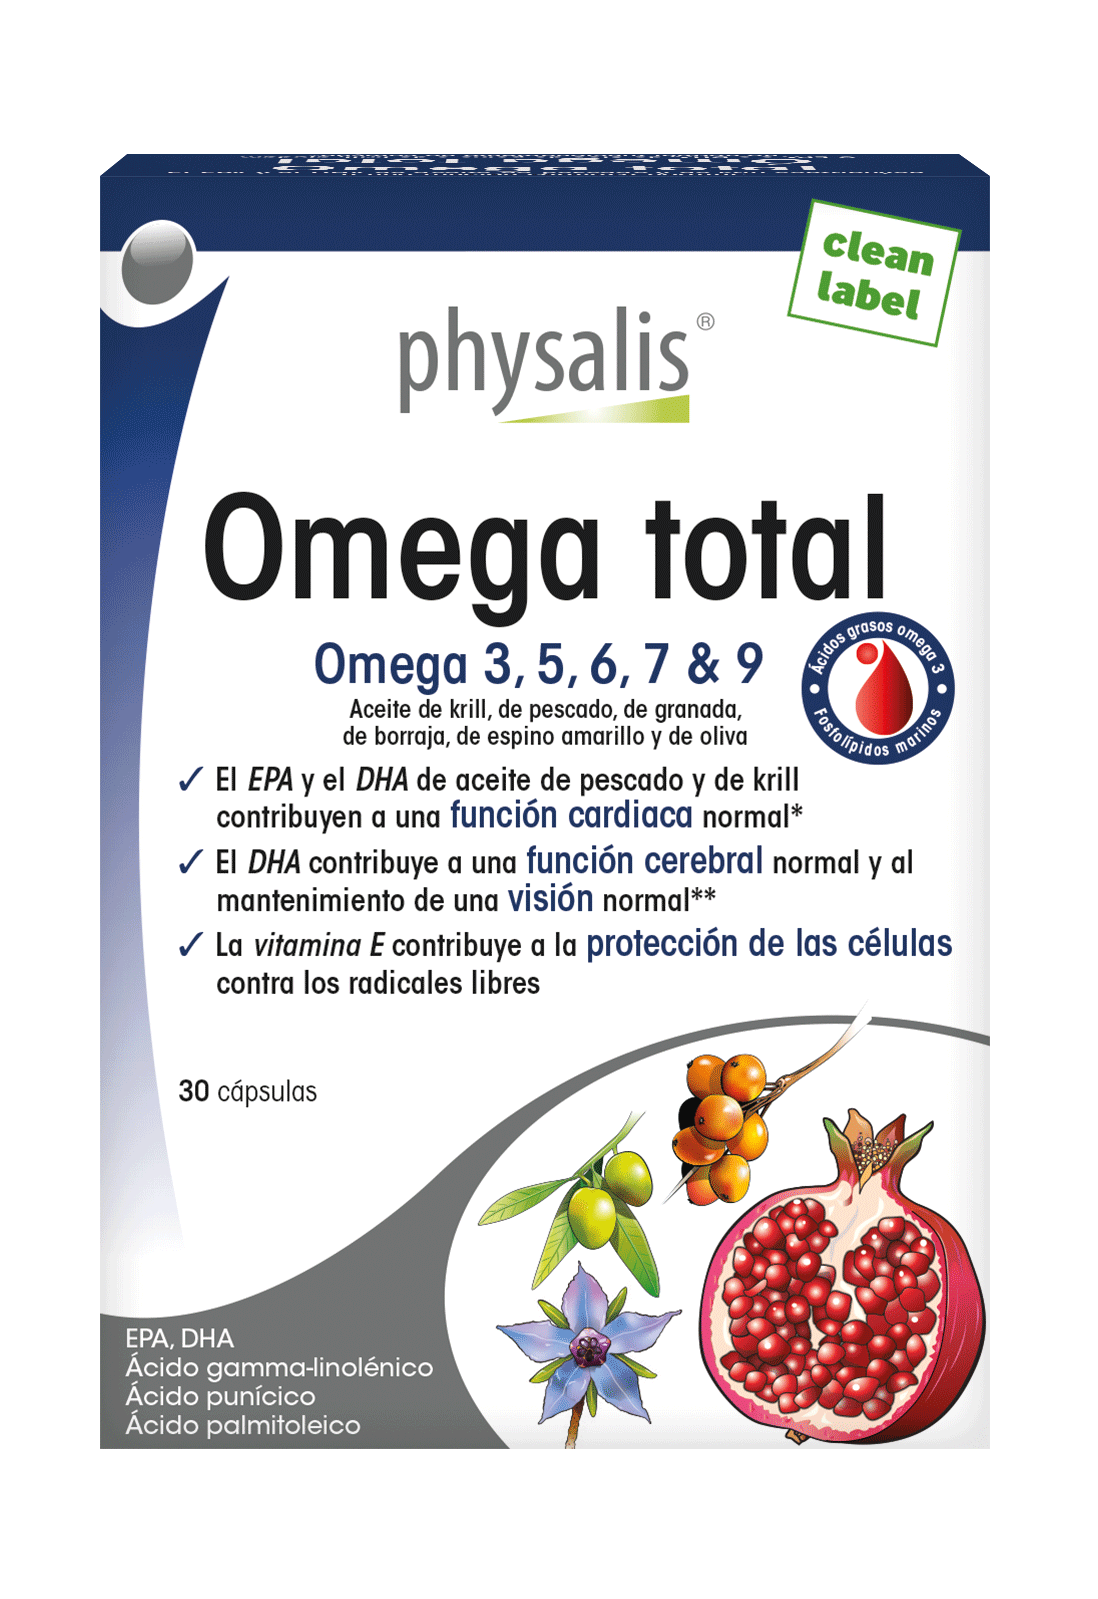 Omega total